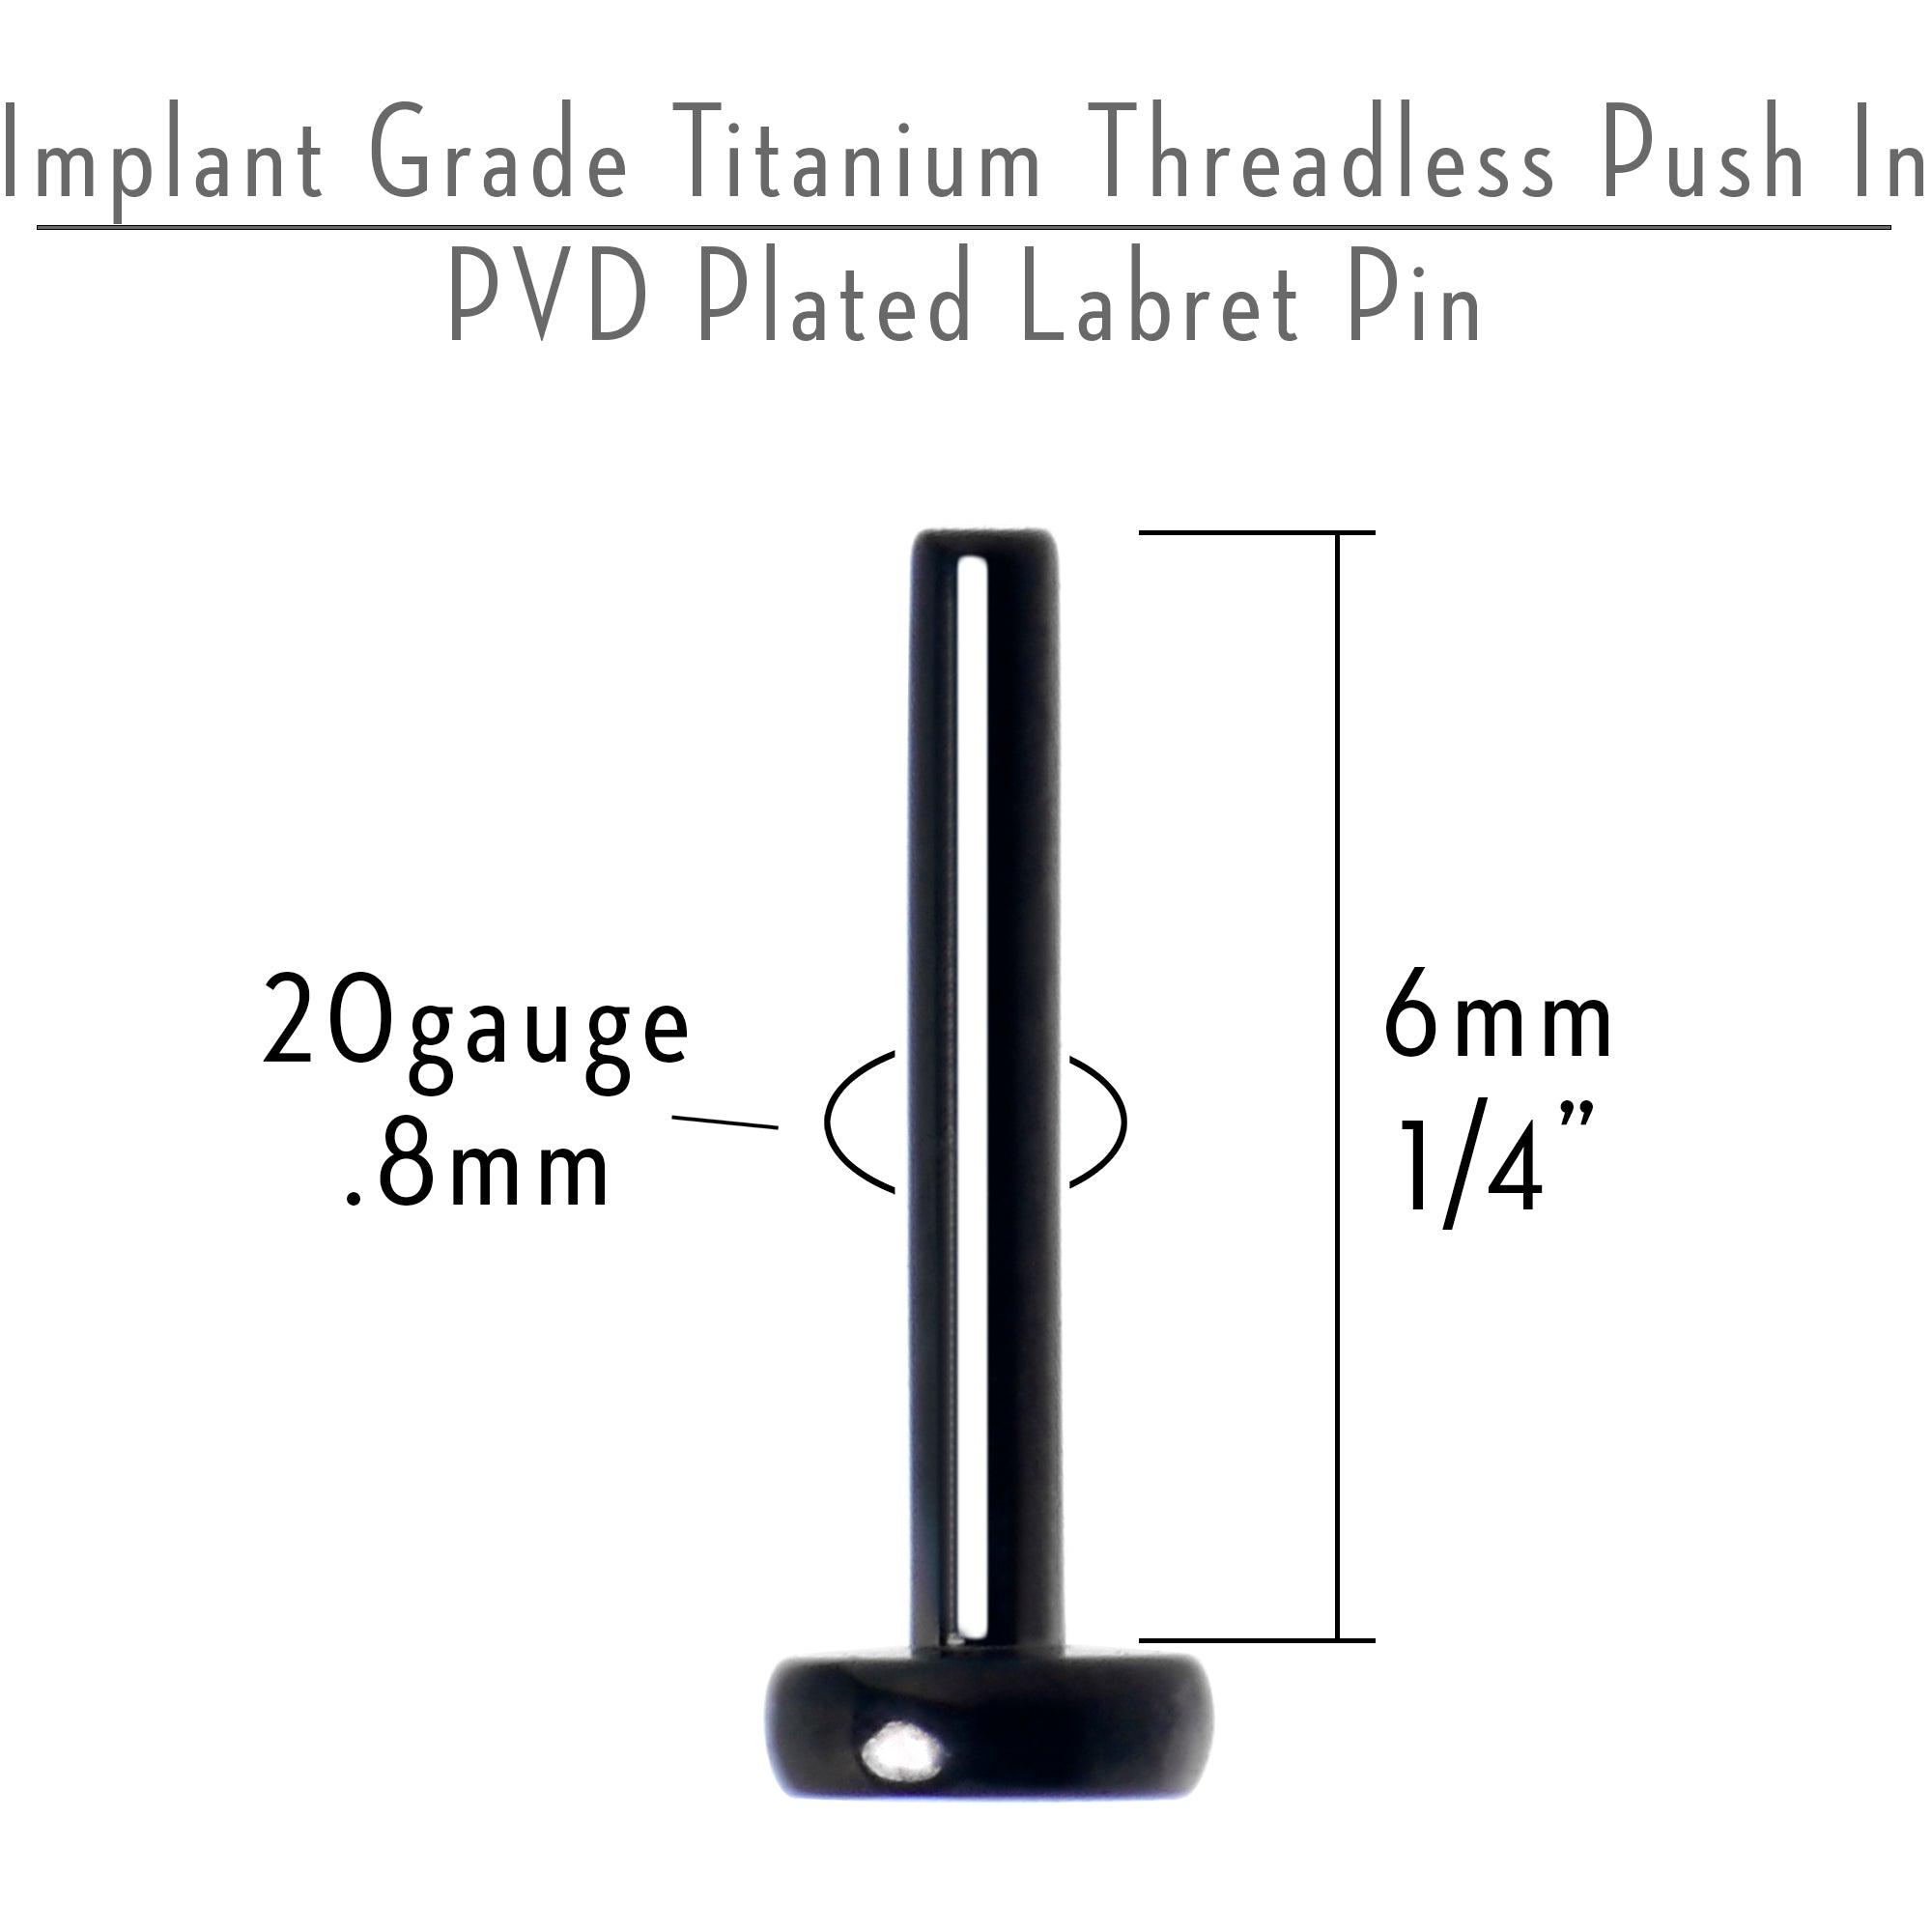 20 Gauge 1/4 Black ASTM F-136 Implant Grade Titanium Threadless Post Only Labret